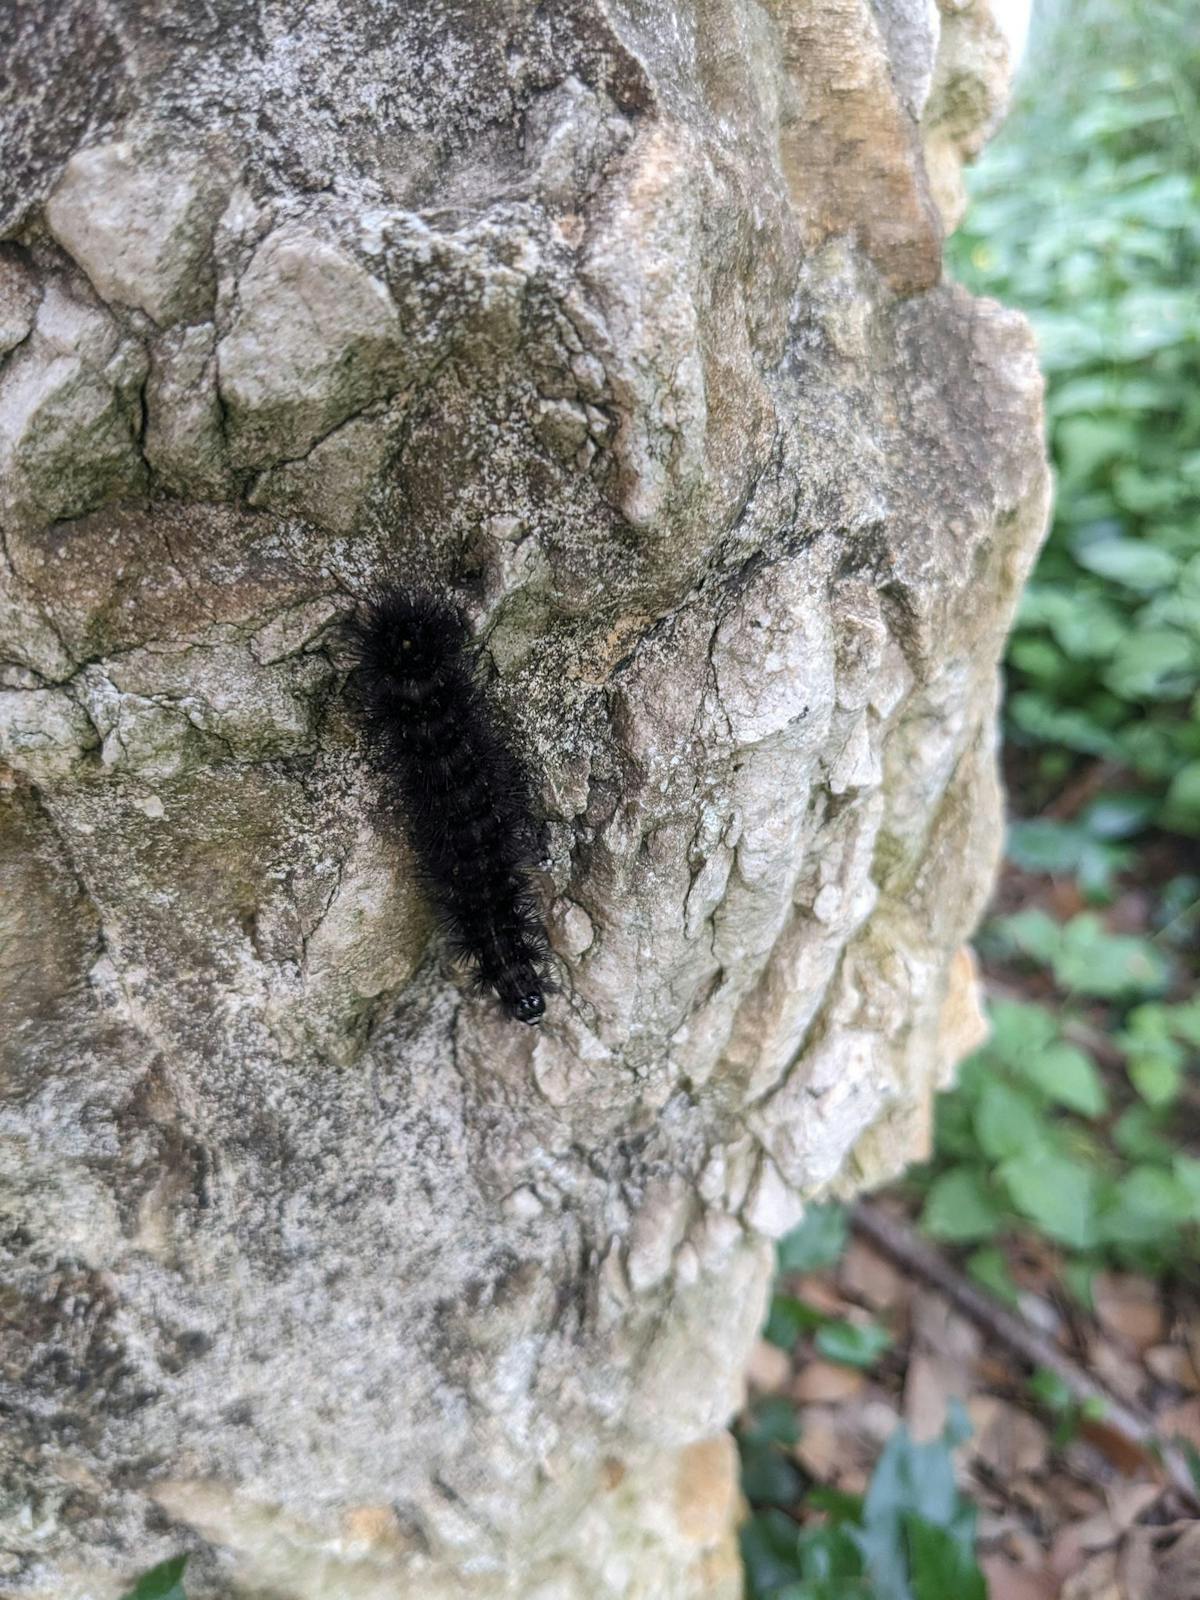 black fuzzy caterpillar on a rock